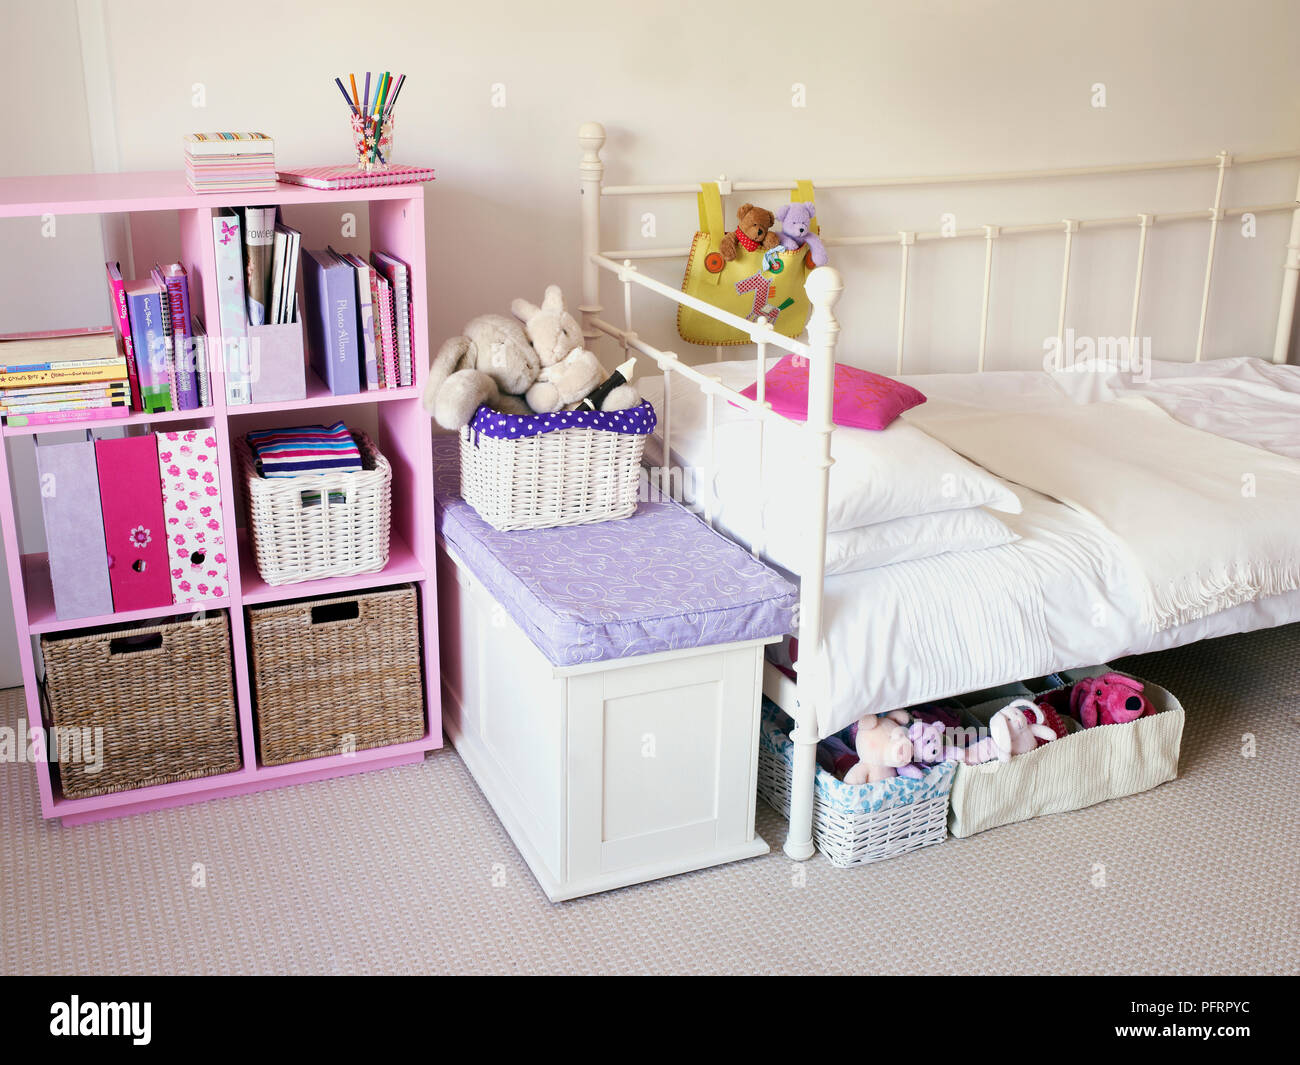 storage for girls bedroom